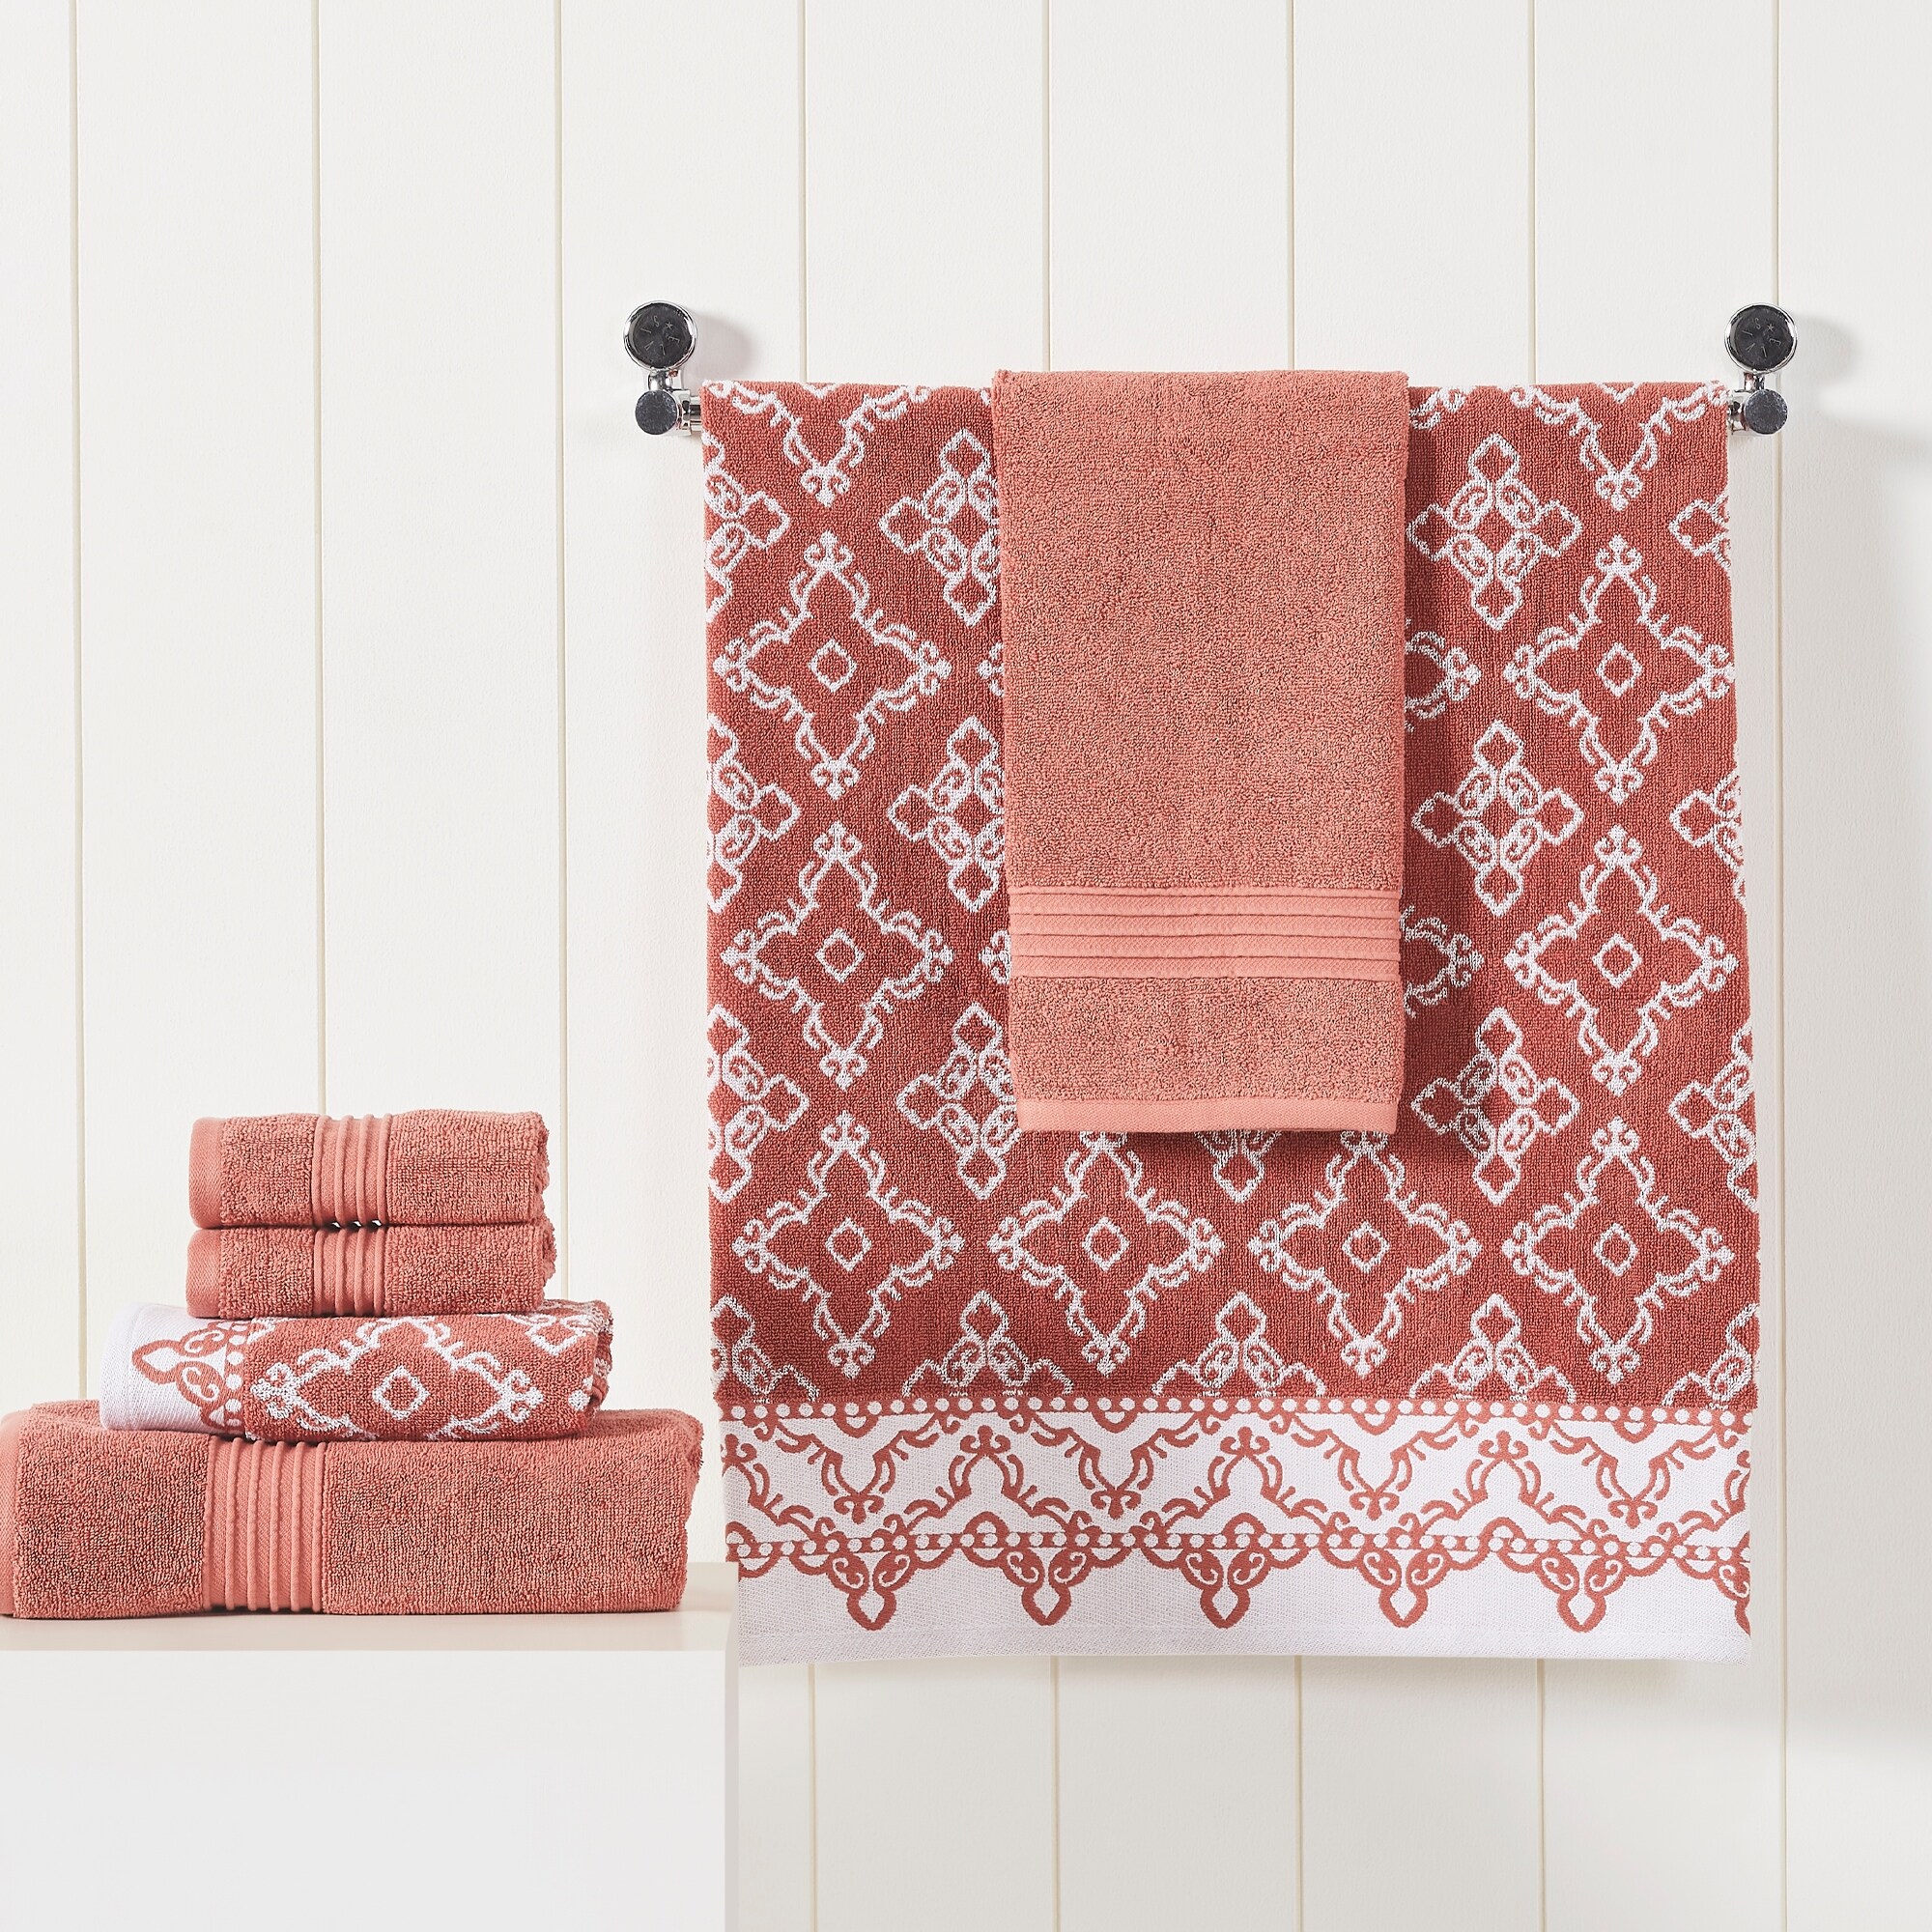 Wrought Studio Stansfield 6 Piece Towel Set, Orange